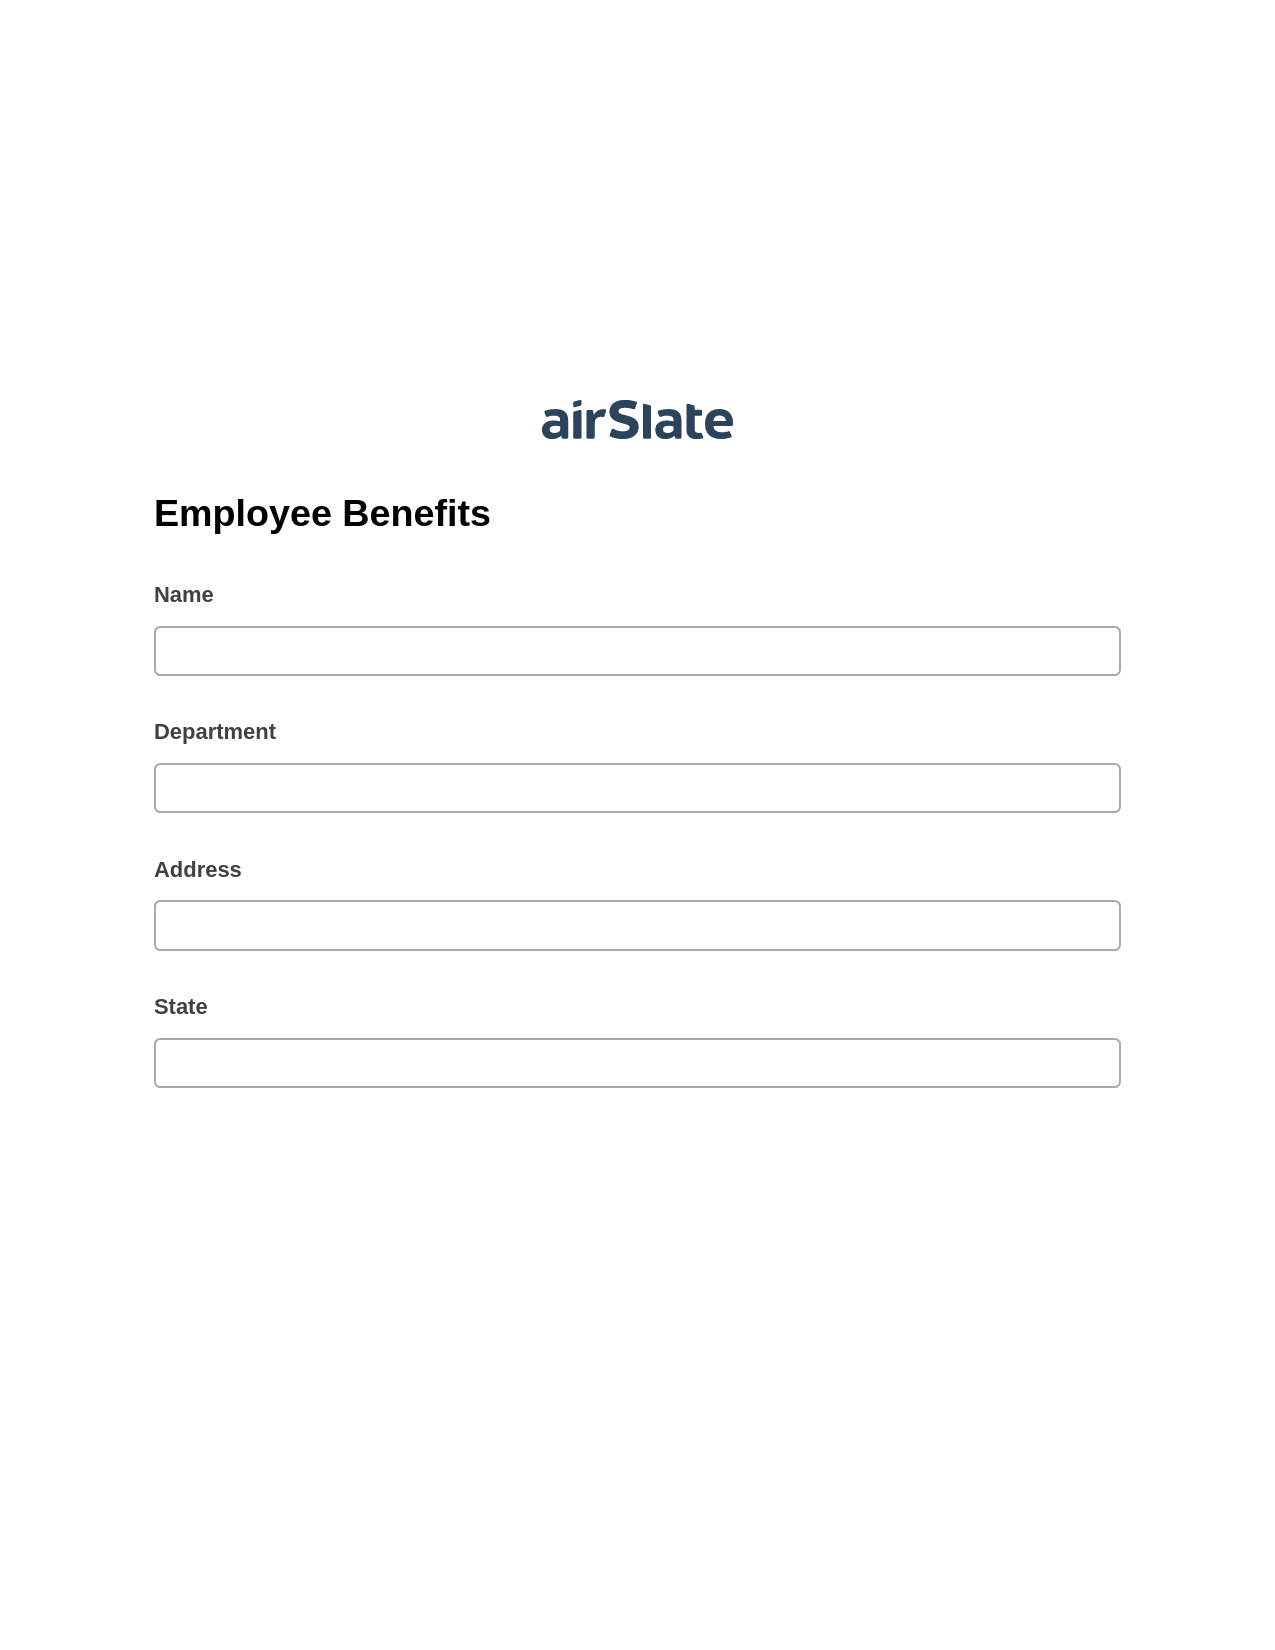 Employee Benefits Pre-fill from NetSuite Records Bot, Webhook Bot, Google Drive Bot